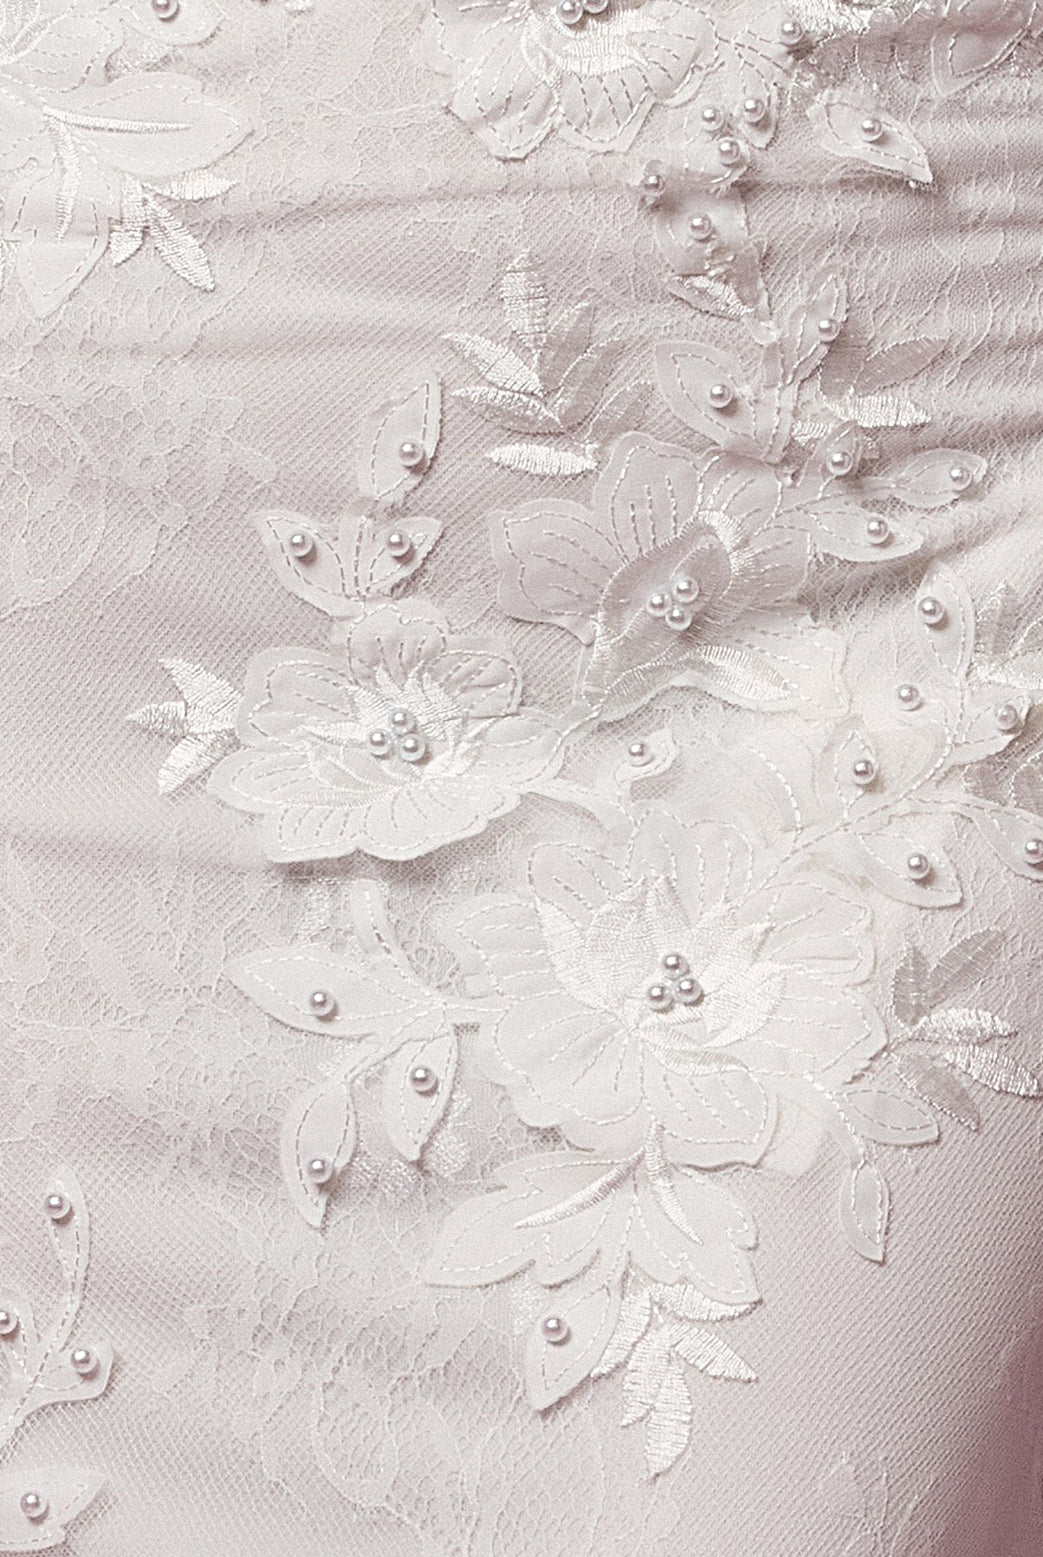 Lace & Beads Embroidered Mermaid Long Wedding Dress NXF485W-Wedding Dress-smcfashion.com